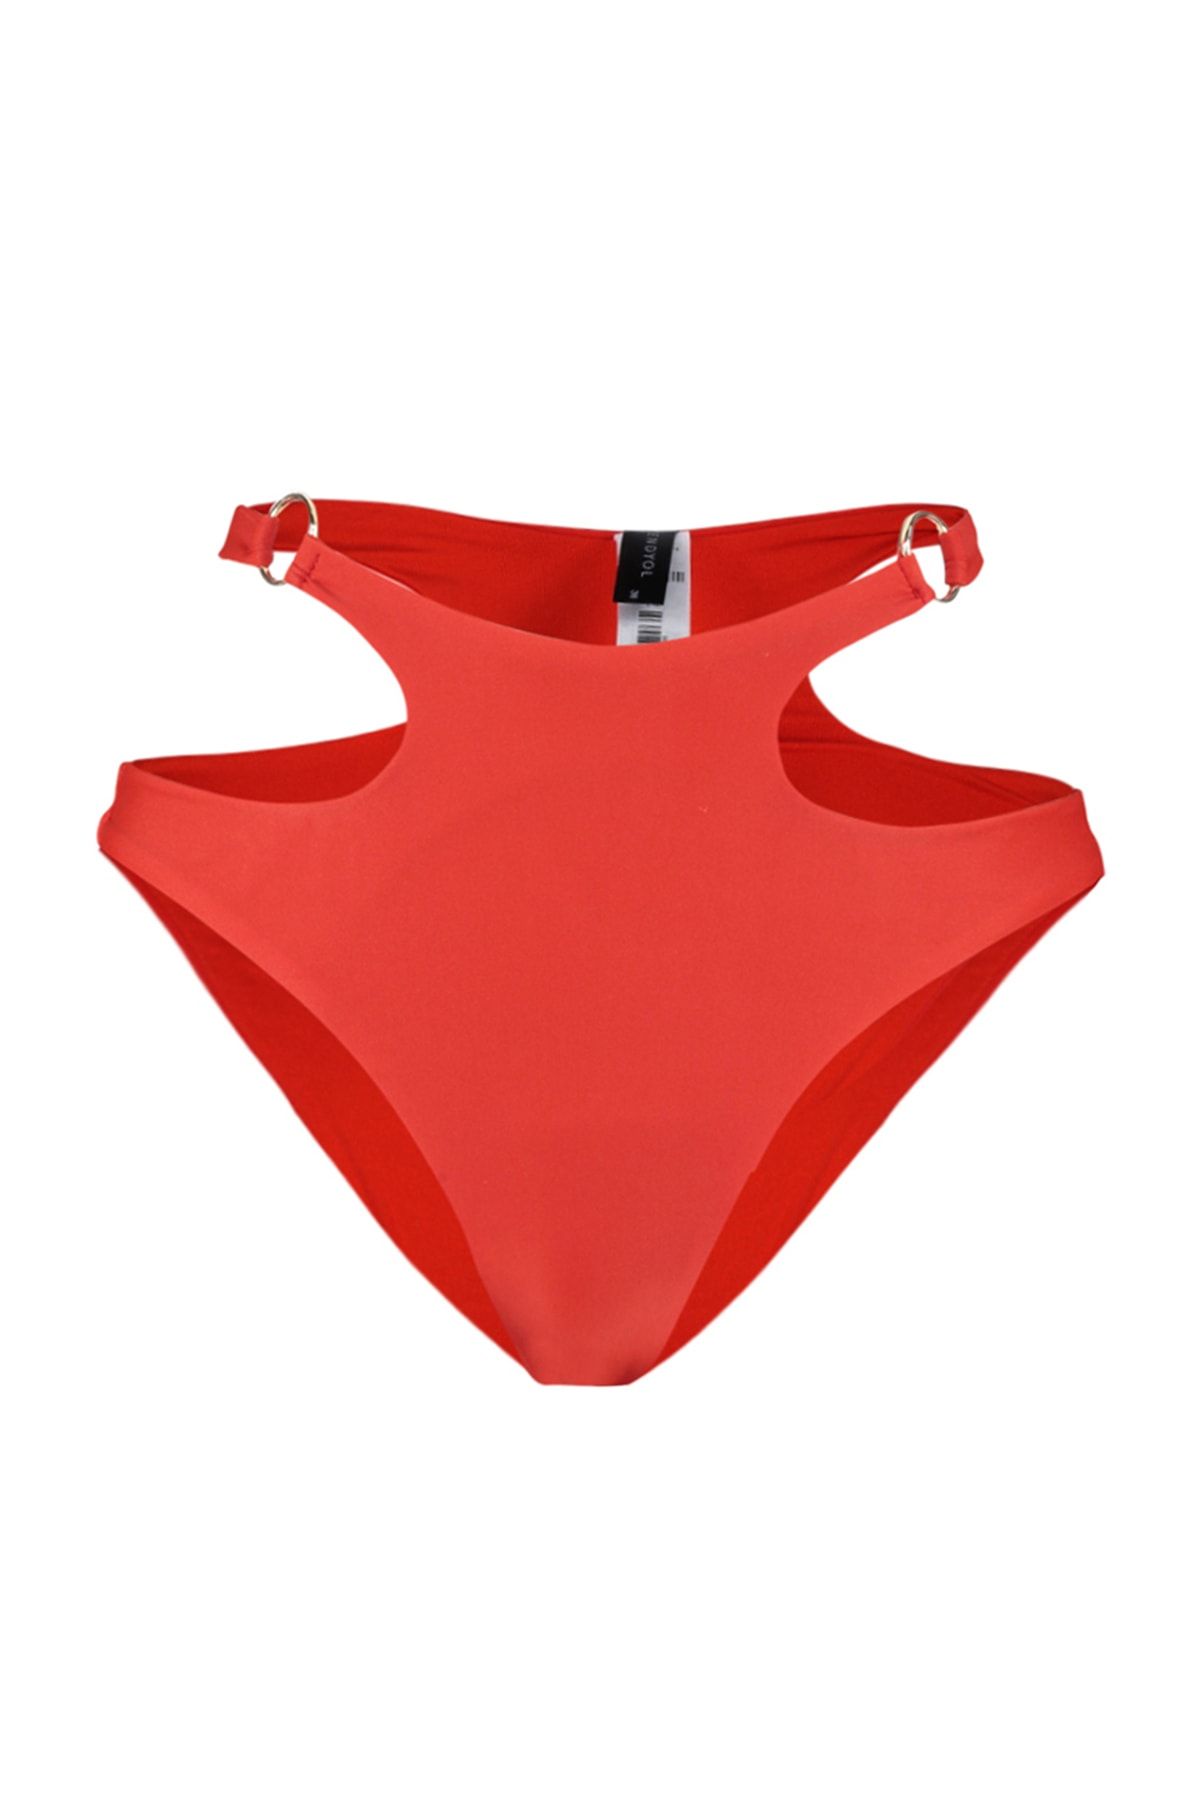 Trendyol Collection Red Thong High Waist High Leg Bikini Bottom  TBESS23BA00294 - Trendyol